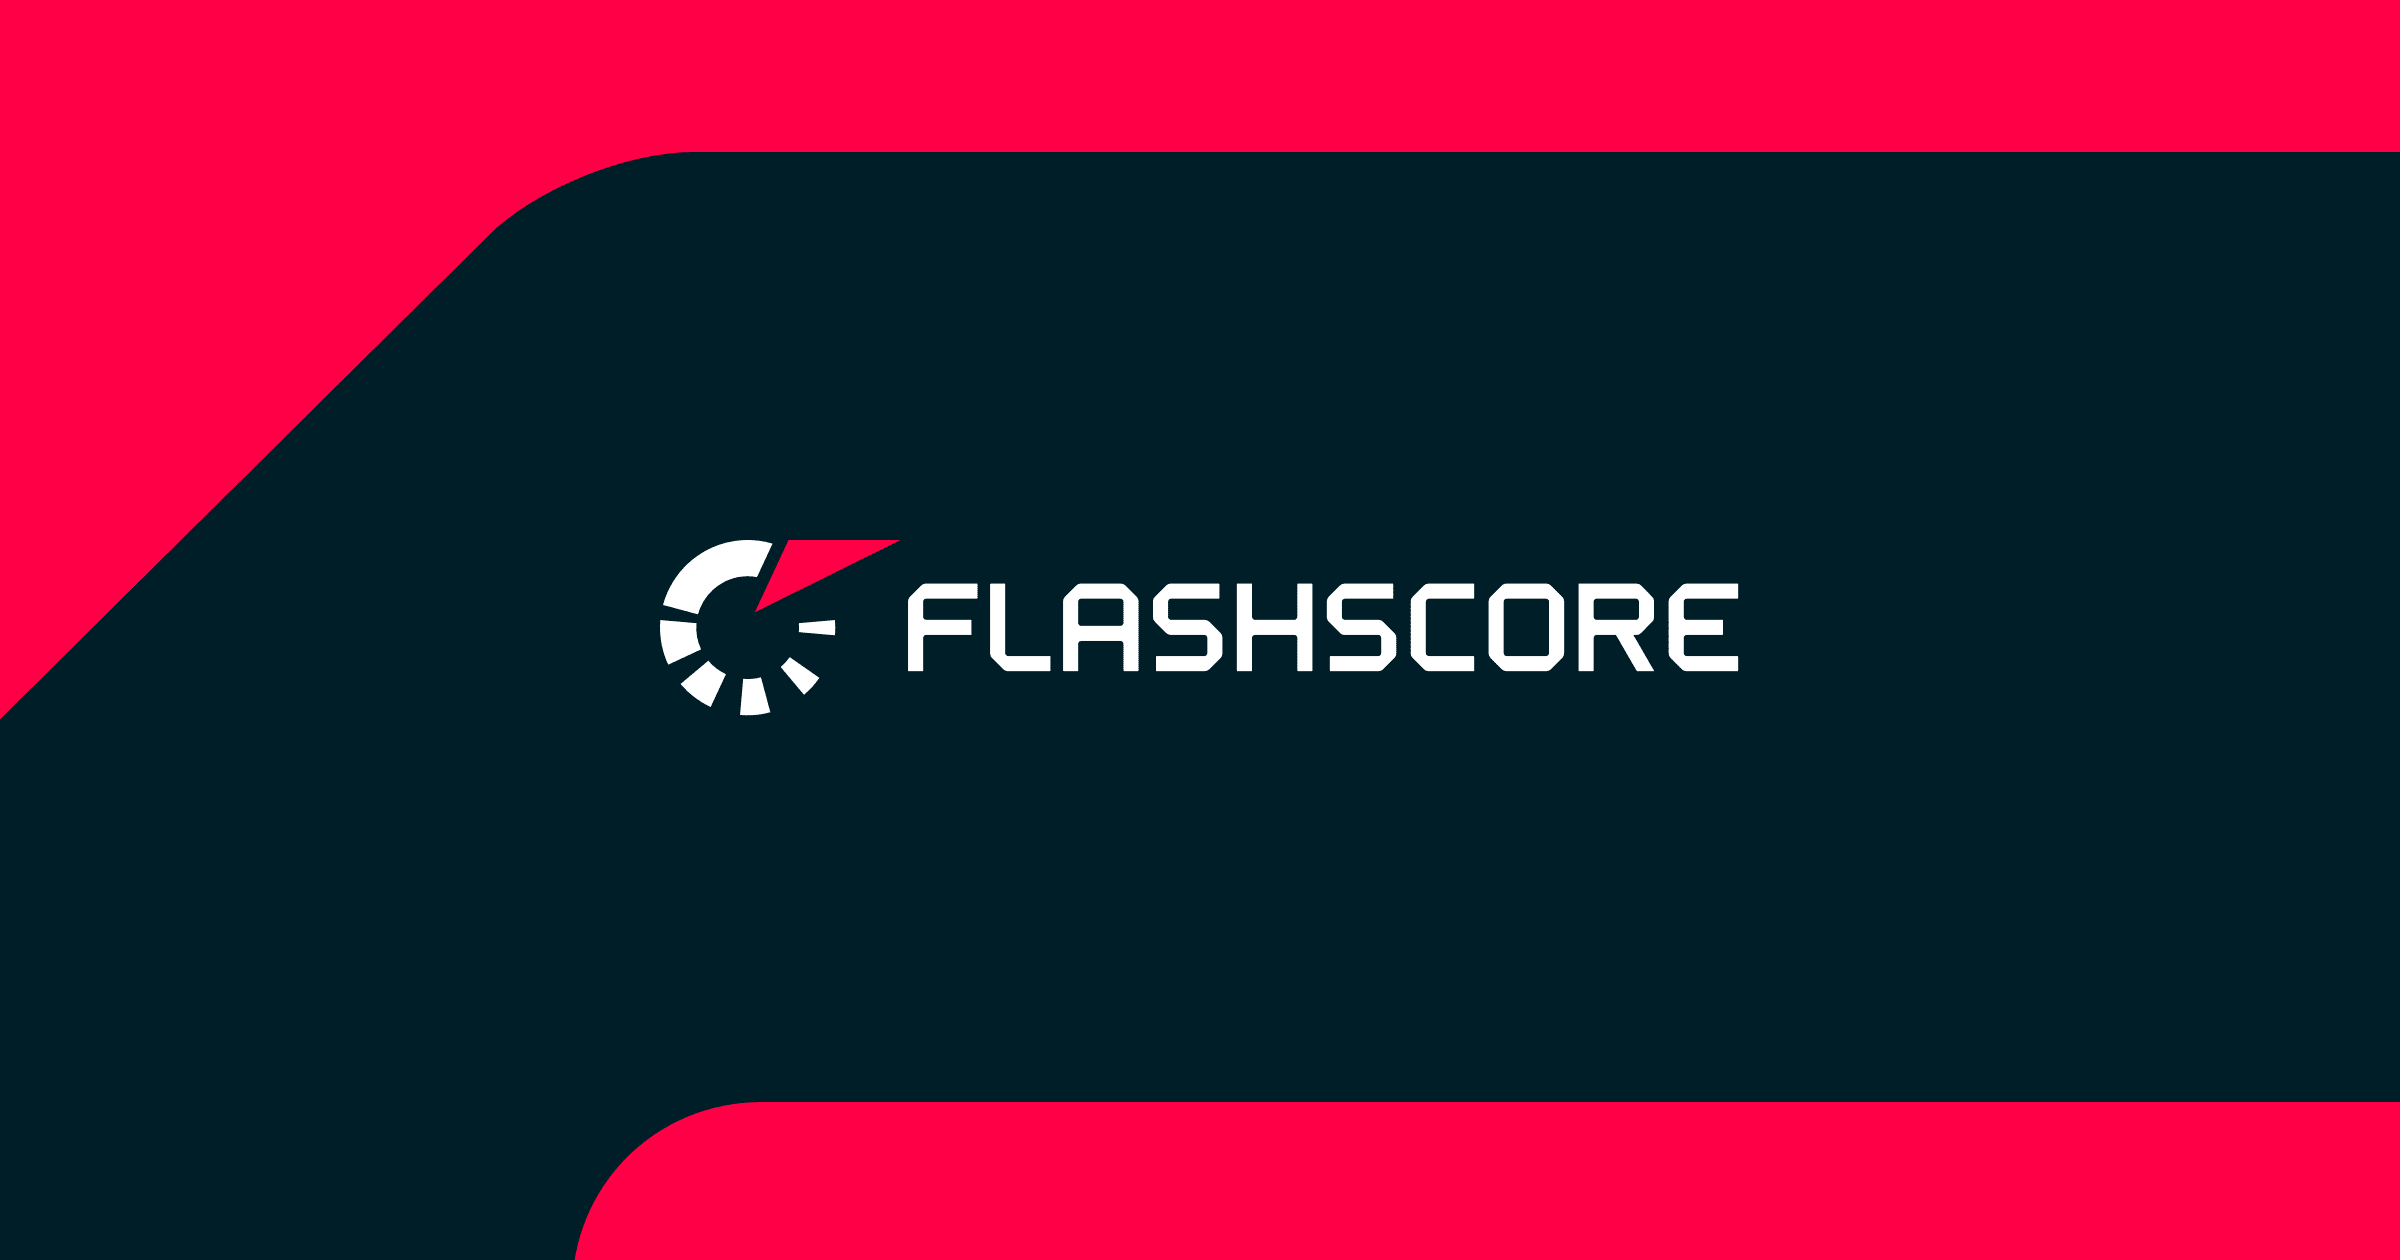 www.flashscore.com results